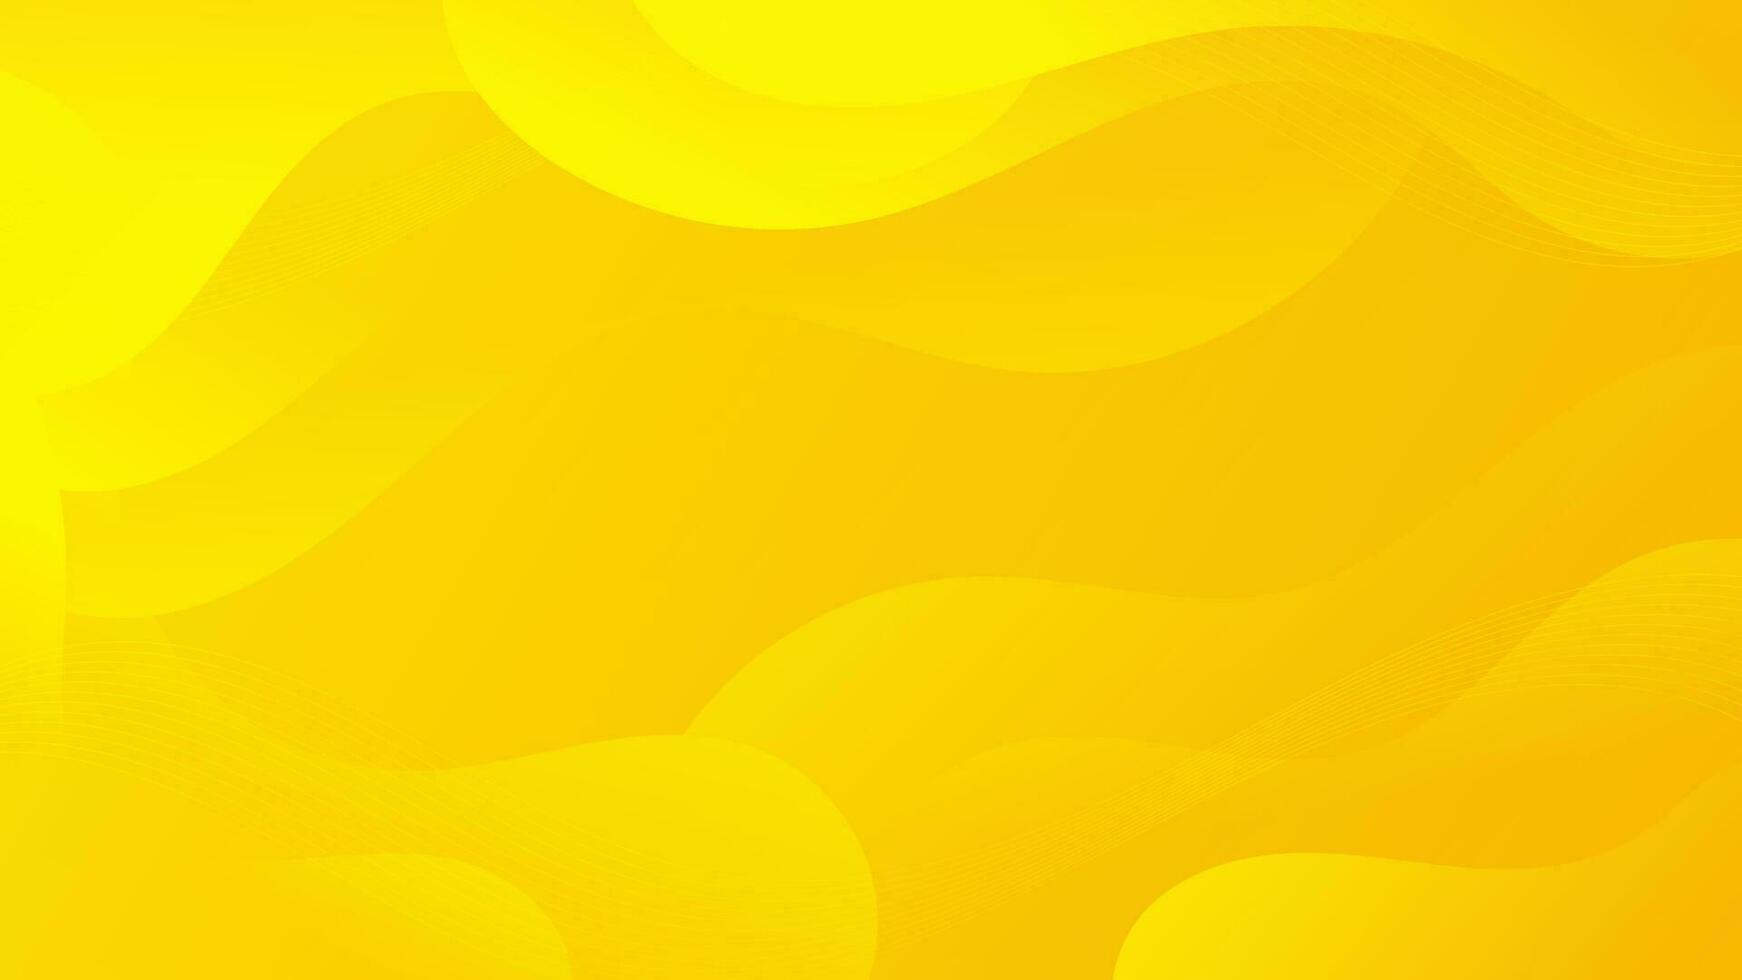 abstrakt lutning gul flytande Vinka bakgrund vektor